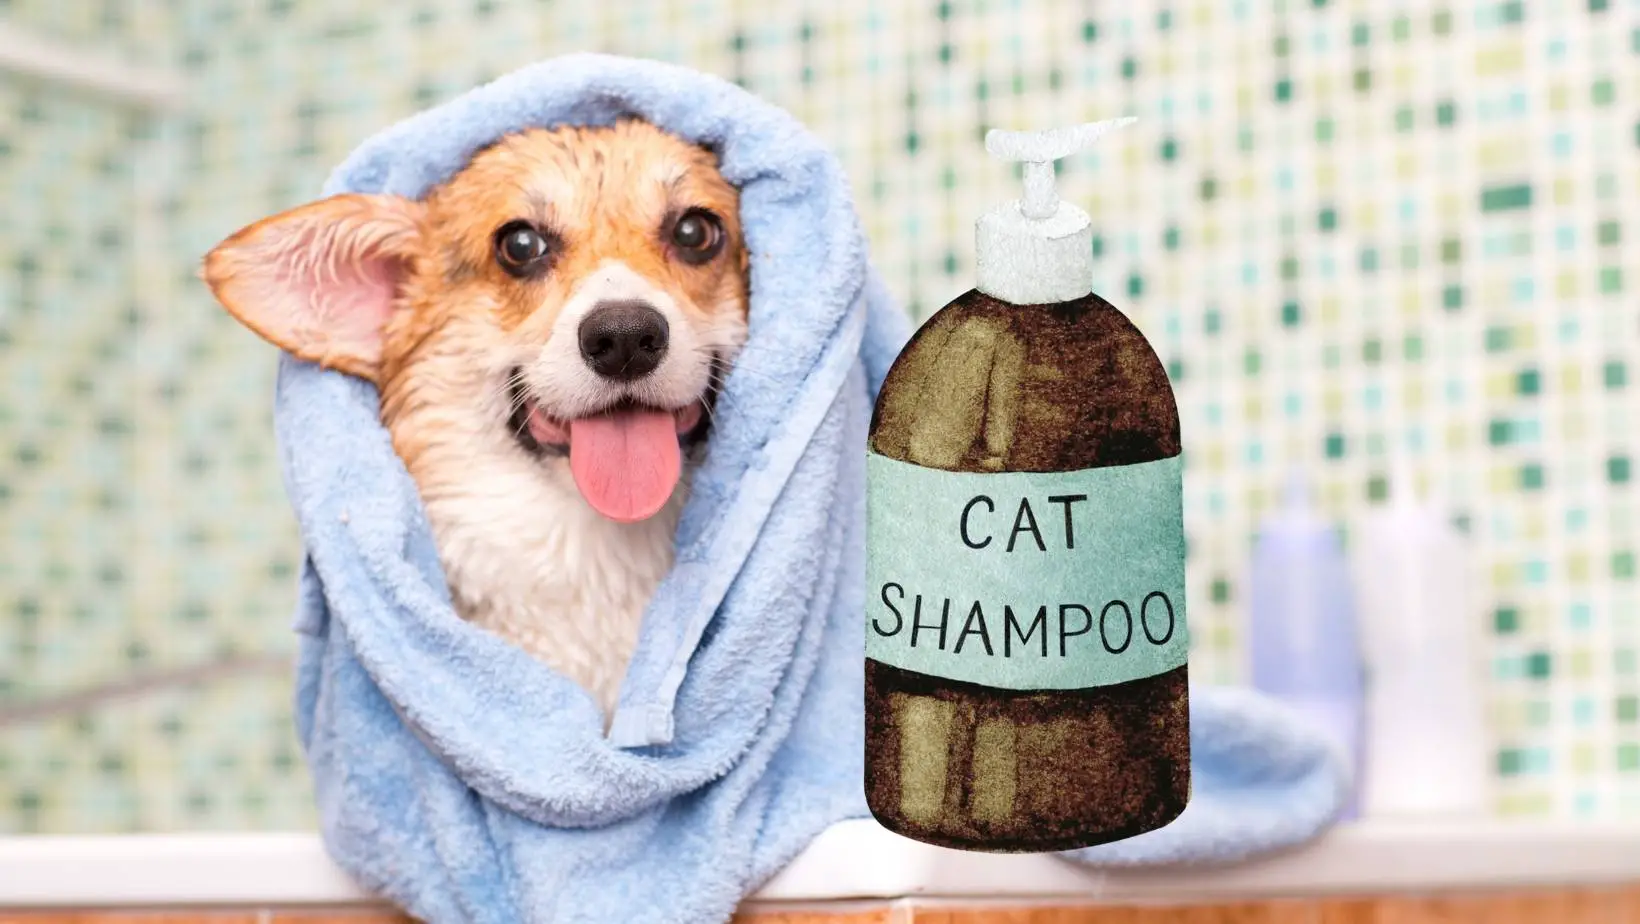 Can You Use Cat Shampoo on a Dog?